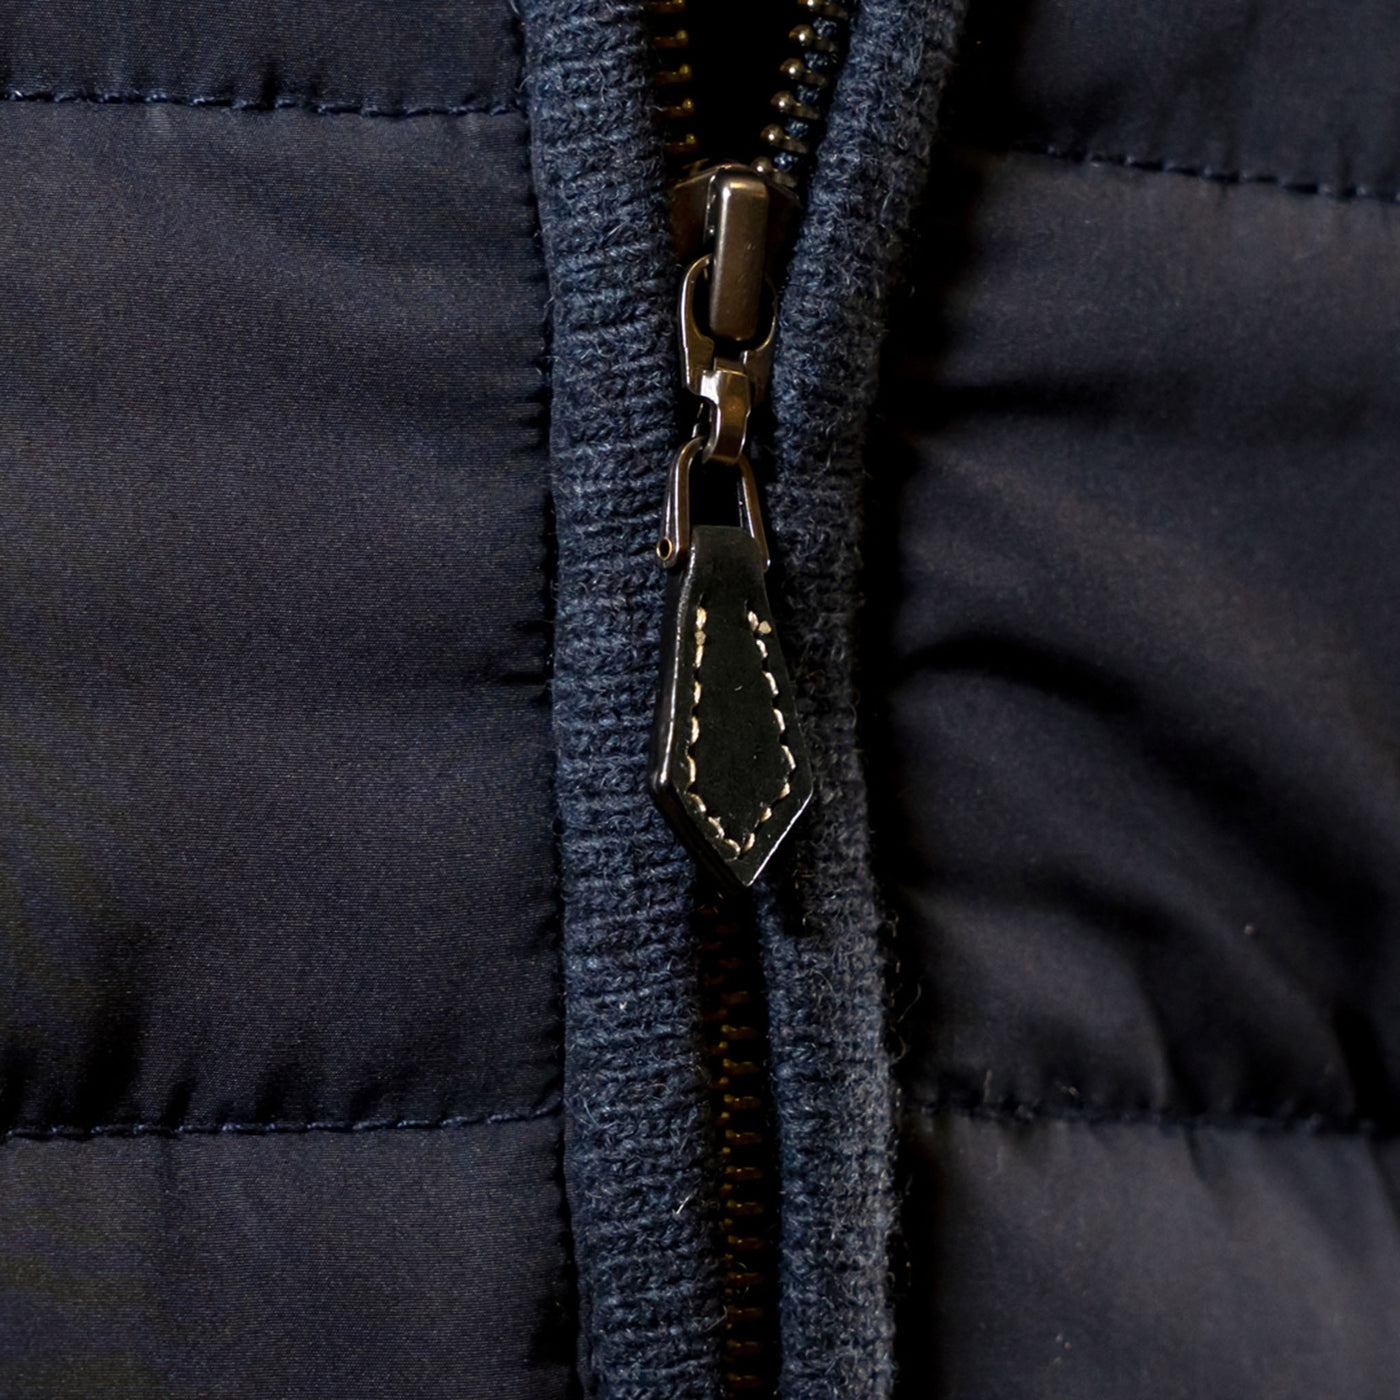 Men's bi-fabric jacket